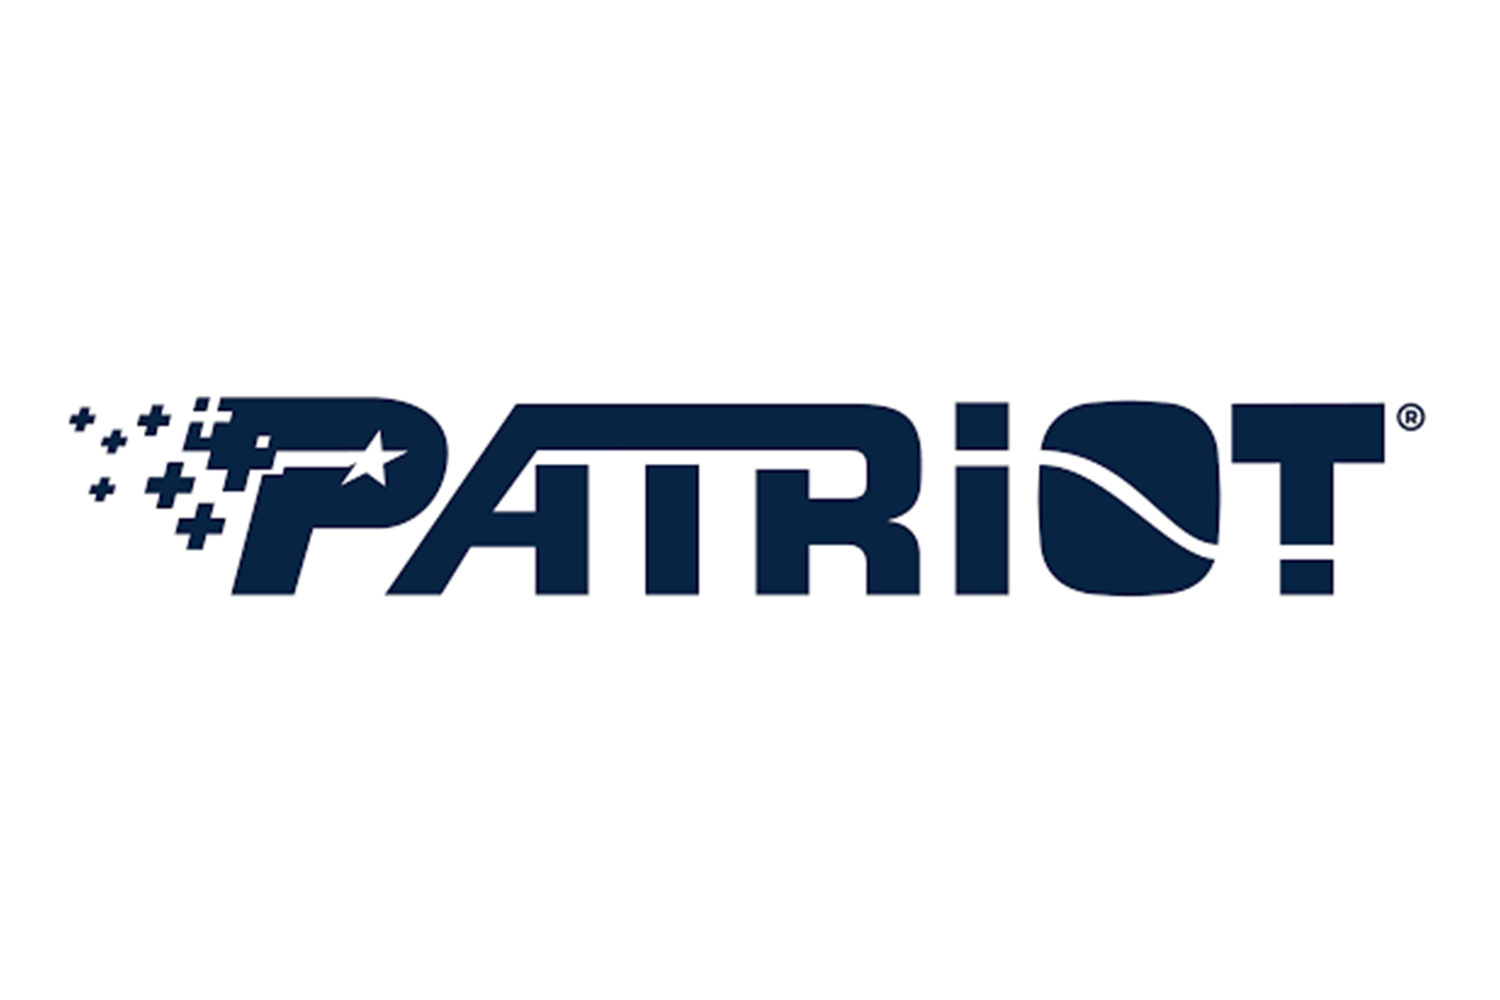 PATRIOT PATRIOT_logo.png